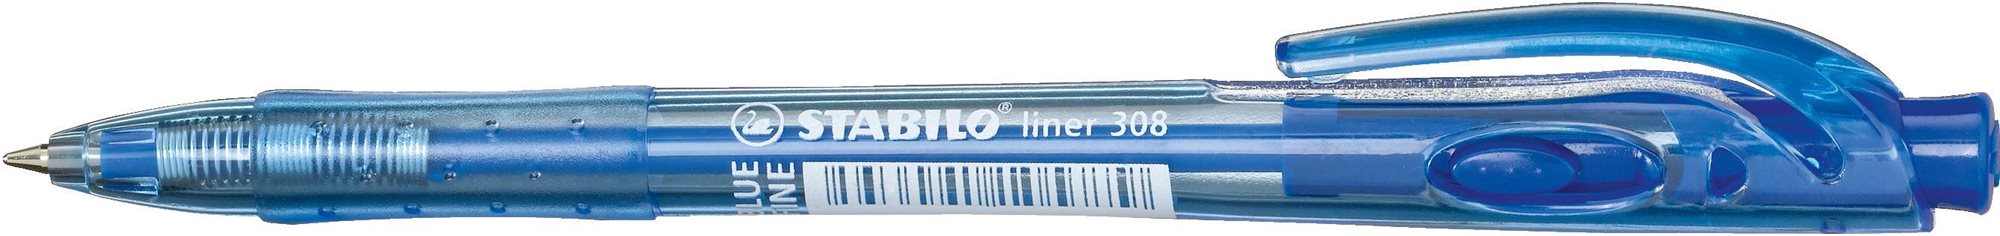 STABILO liner - 1 db - kék